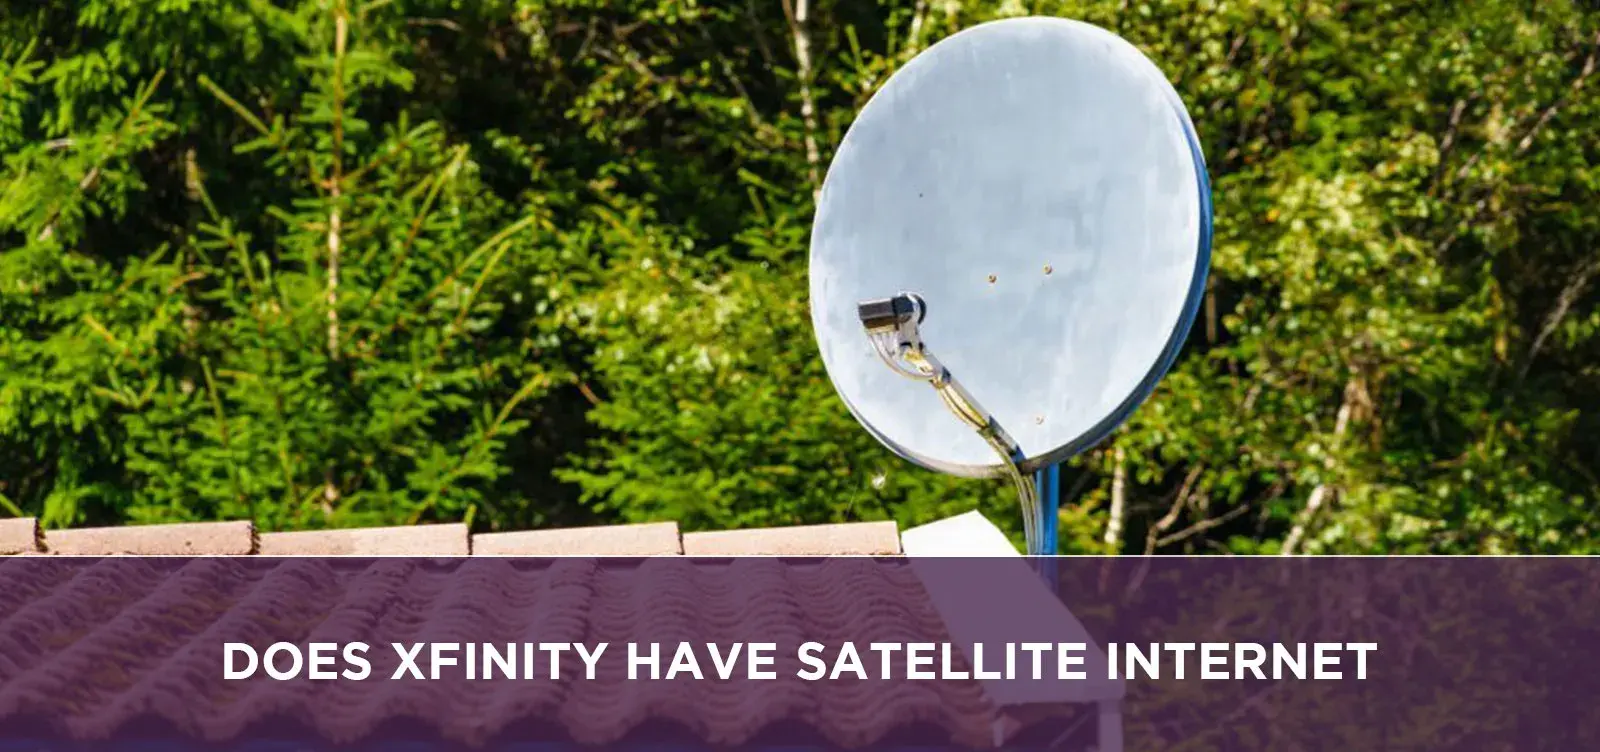 Does Xfinity Have Satellite Internet?